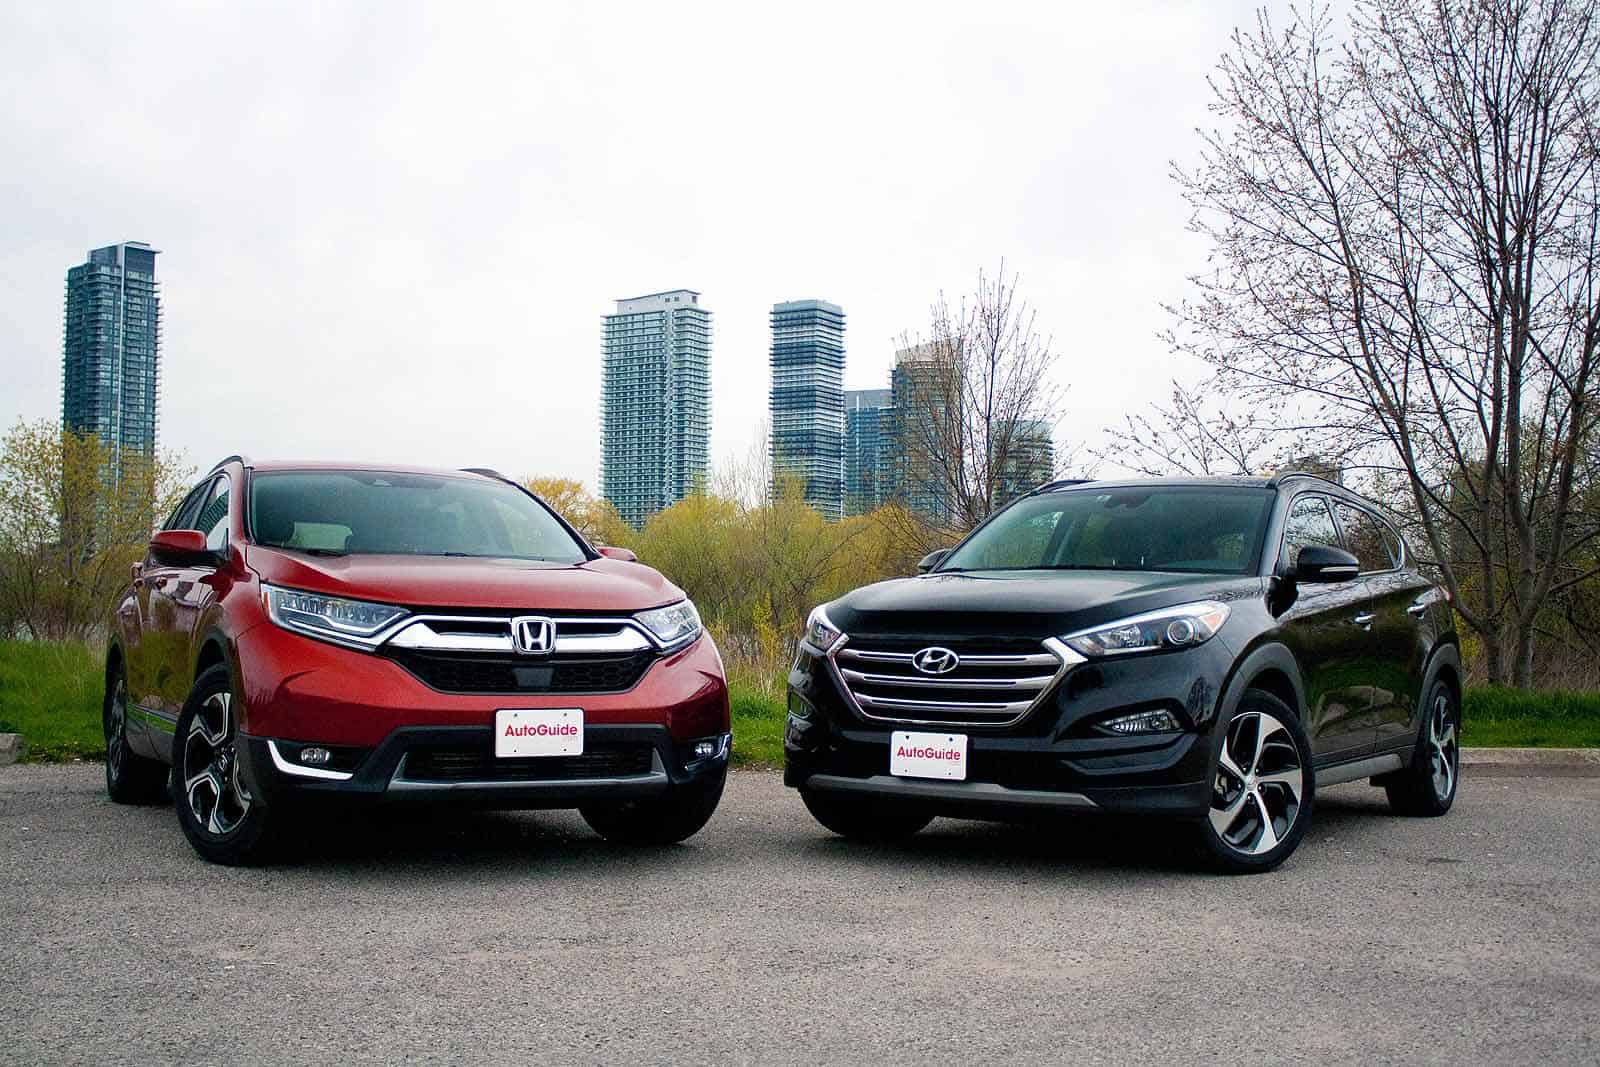 Honda and Hyundai